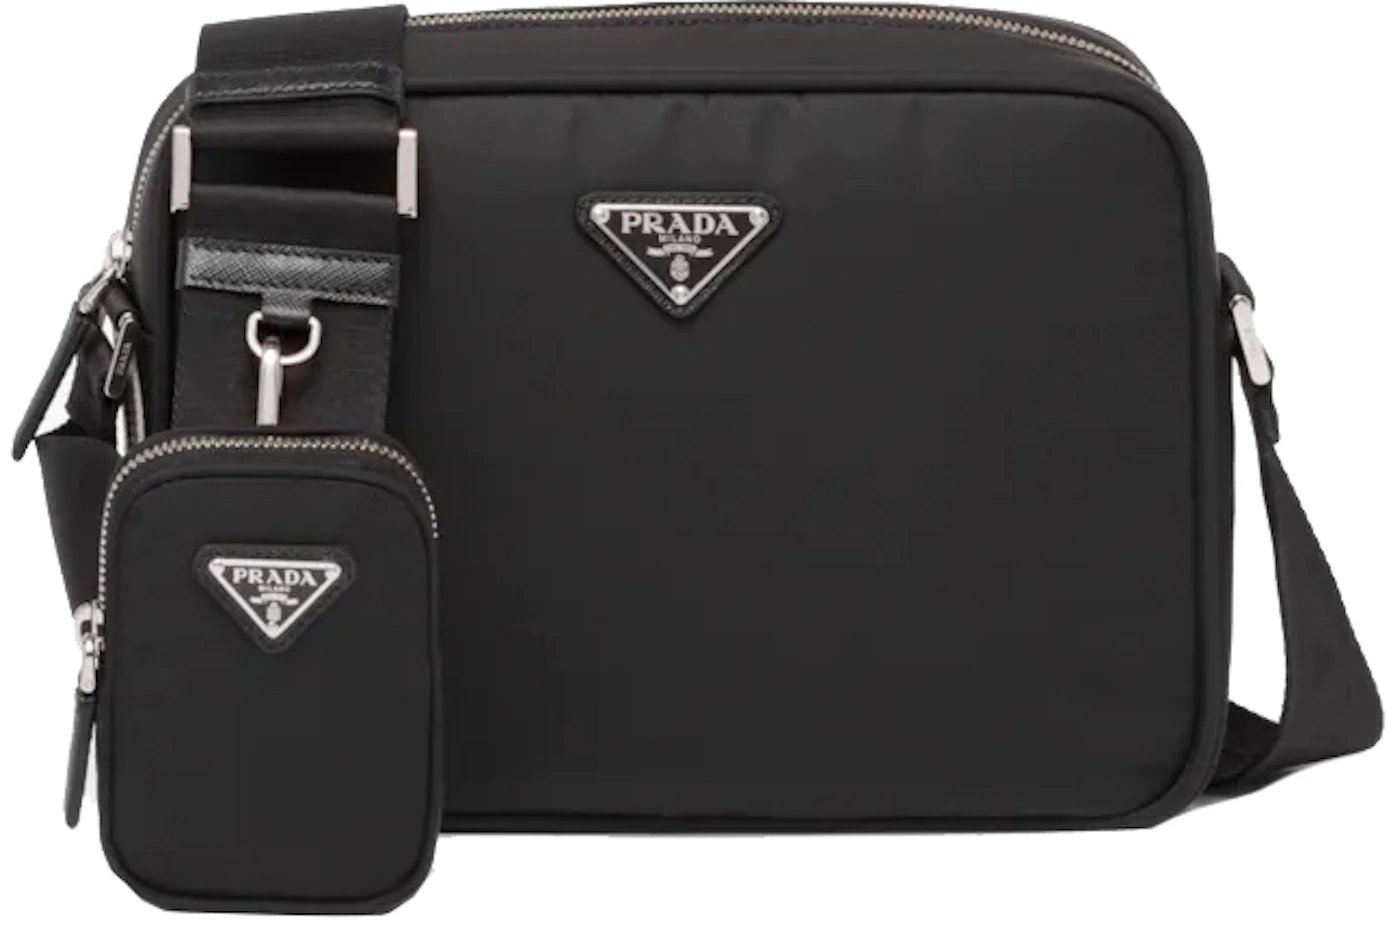 Prada adidas Re-Nylon Shoulder Bag Black in Nylon/Leather with